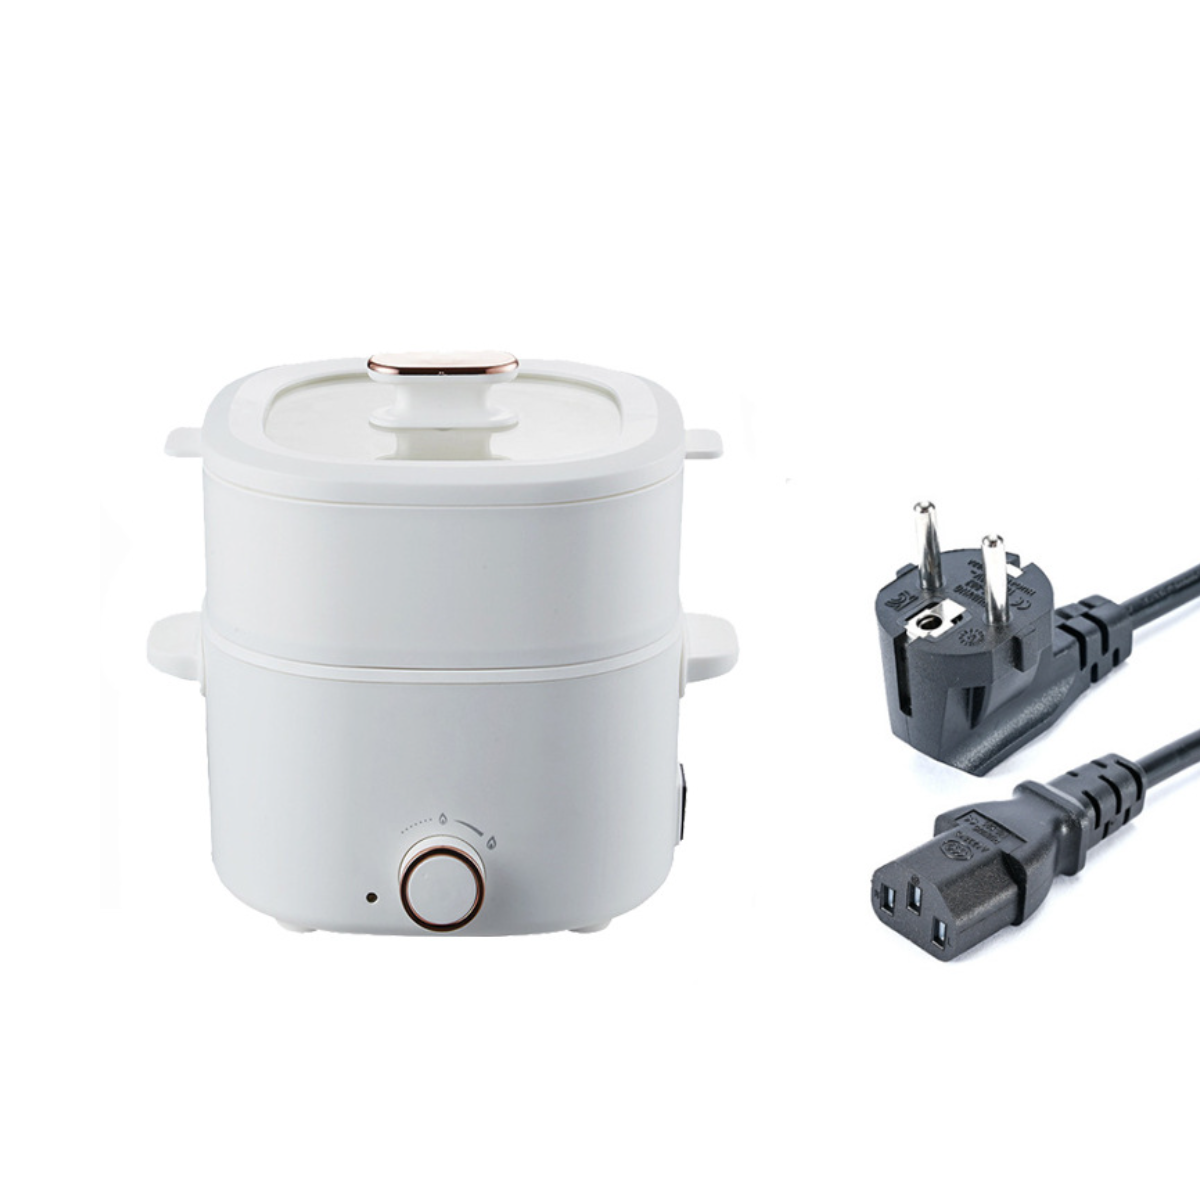 UWOT All-in-One-Dampfgarer: Multifunktional, Doppelter Dampfgarer, Temperaturregelung Watt, per Knopfdruck Weiß) (700 Dampfer